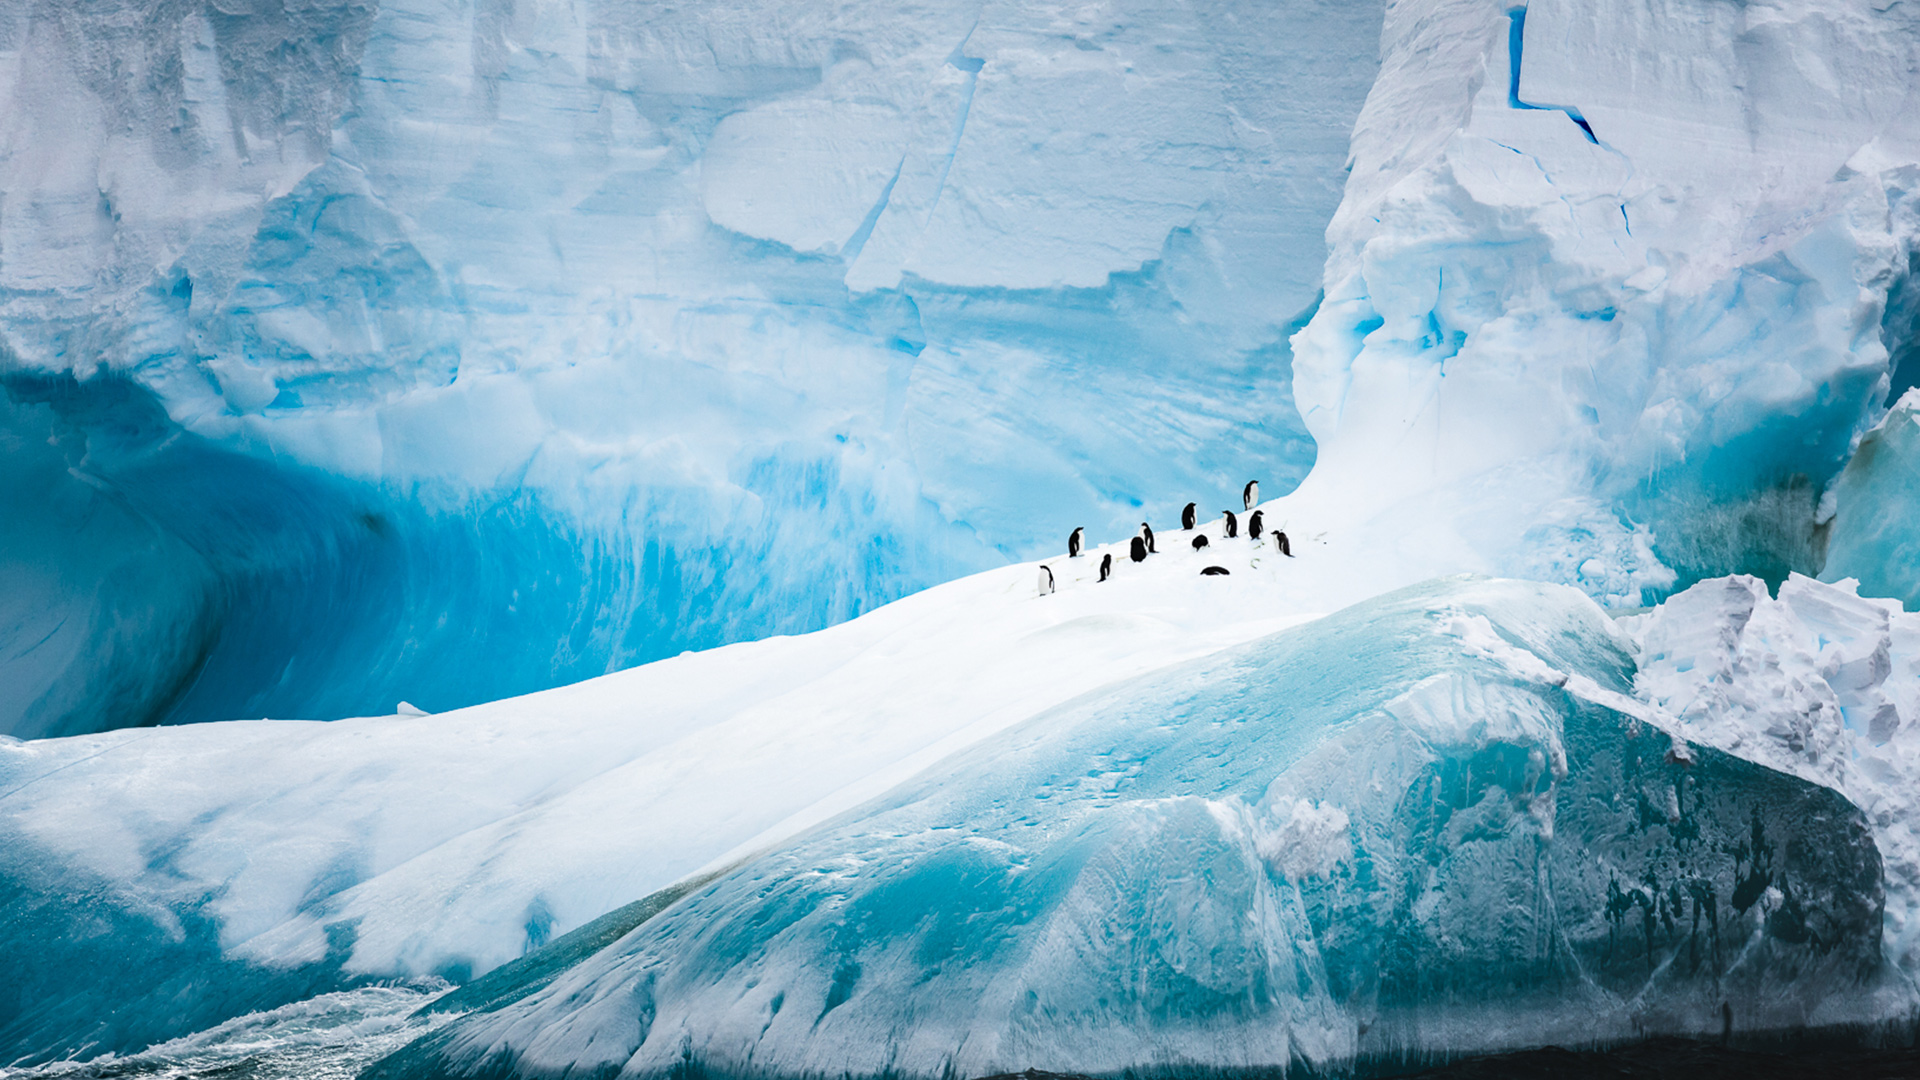 Antarctica_©AndrewPeacock©____20170128_063837_440_1684x1080_1683kB____20170128_063837_440_1684x1080_1683kB